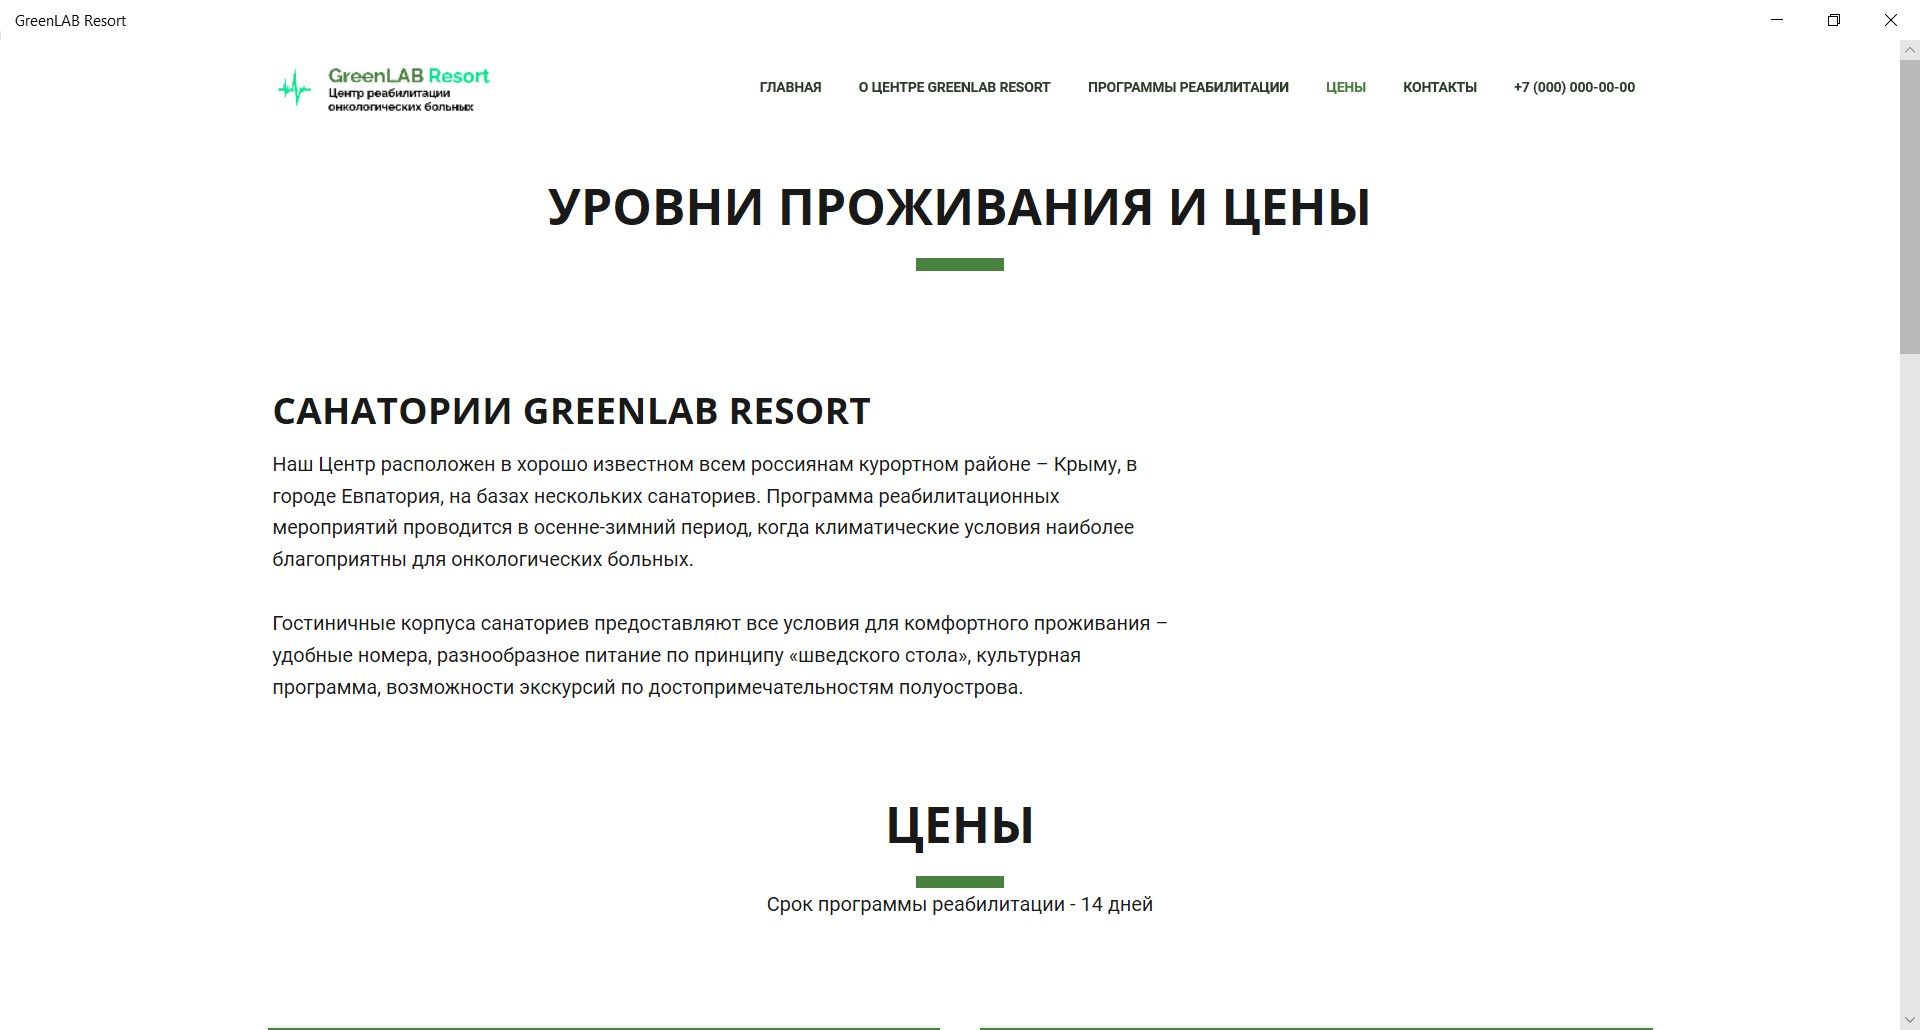 GreenLAB Resort